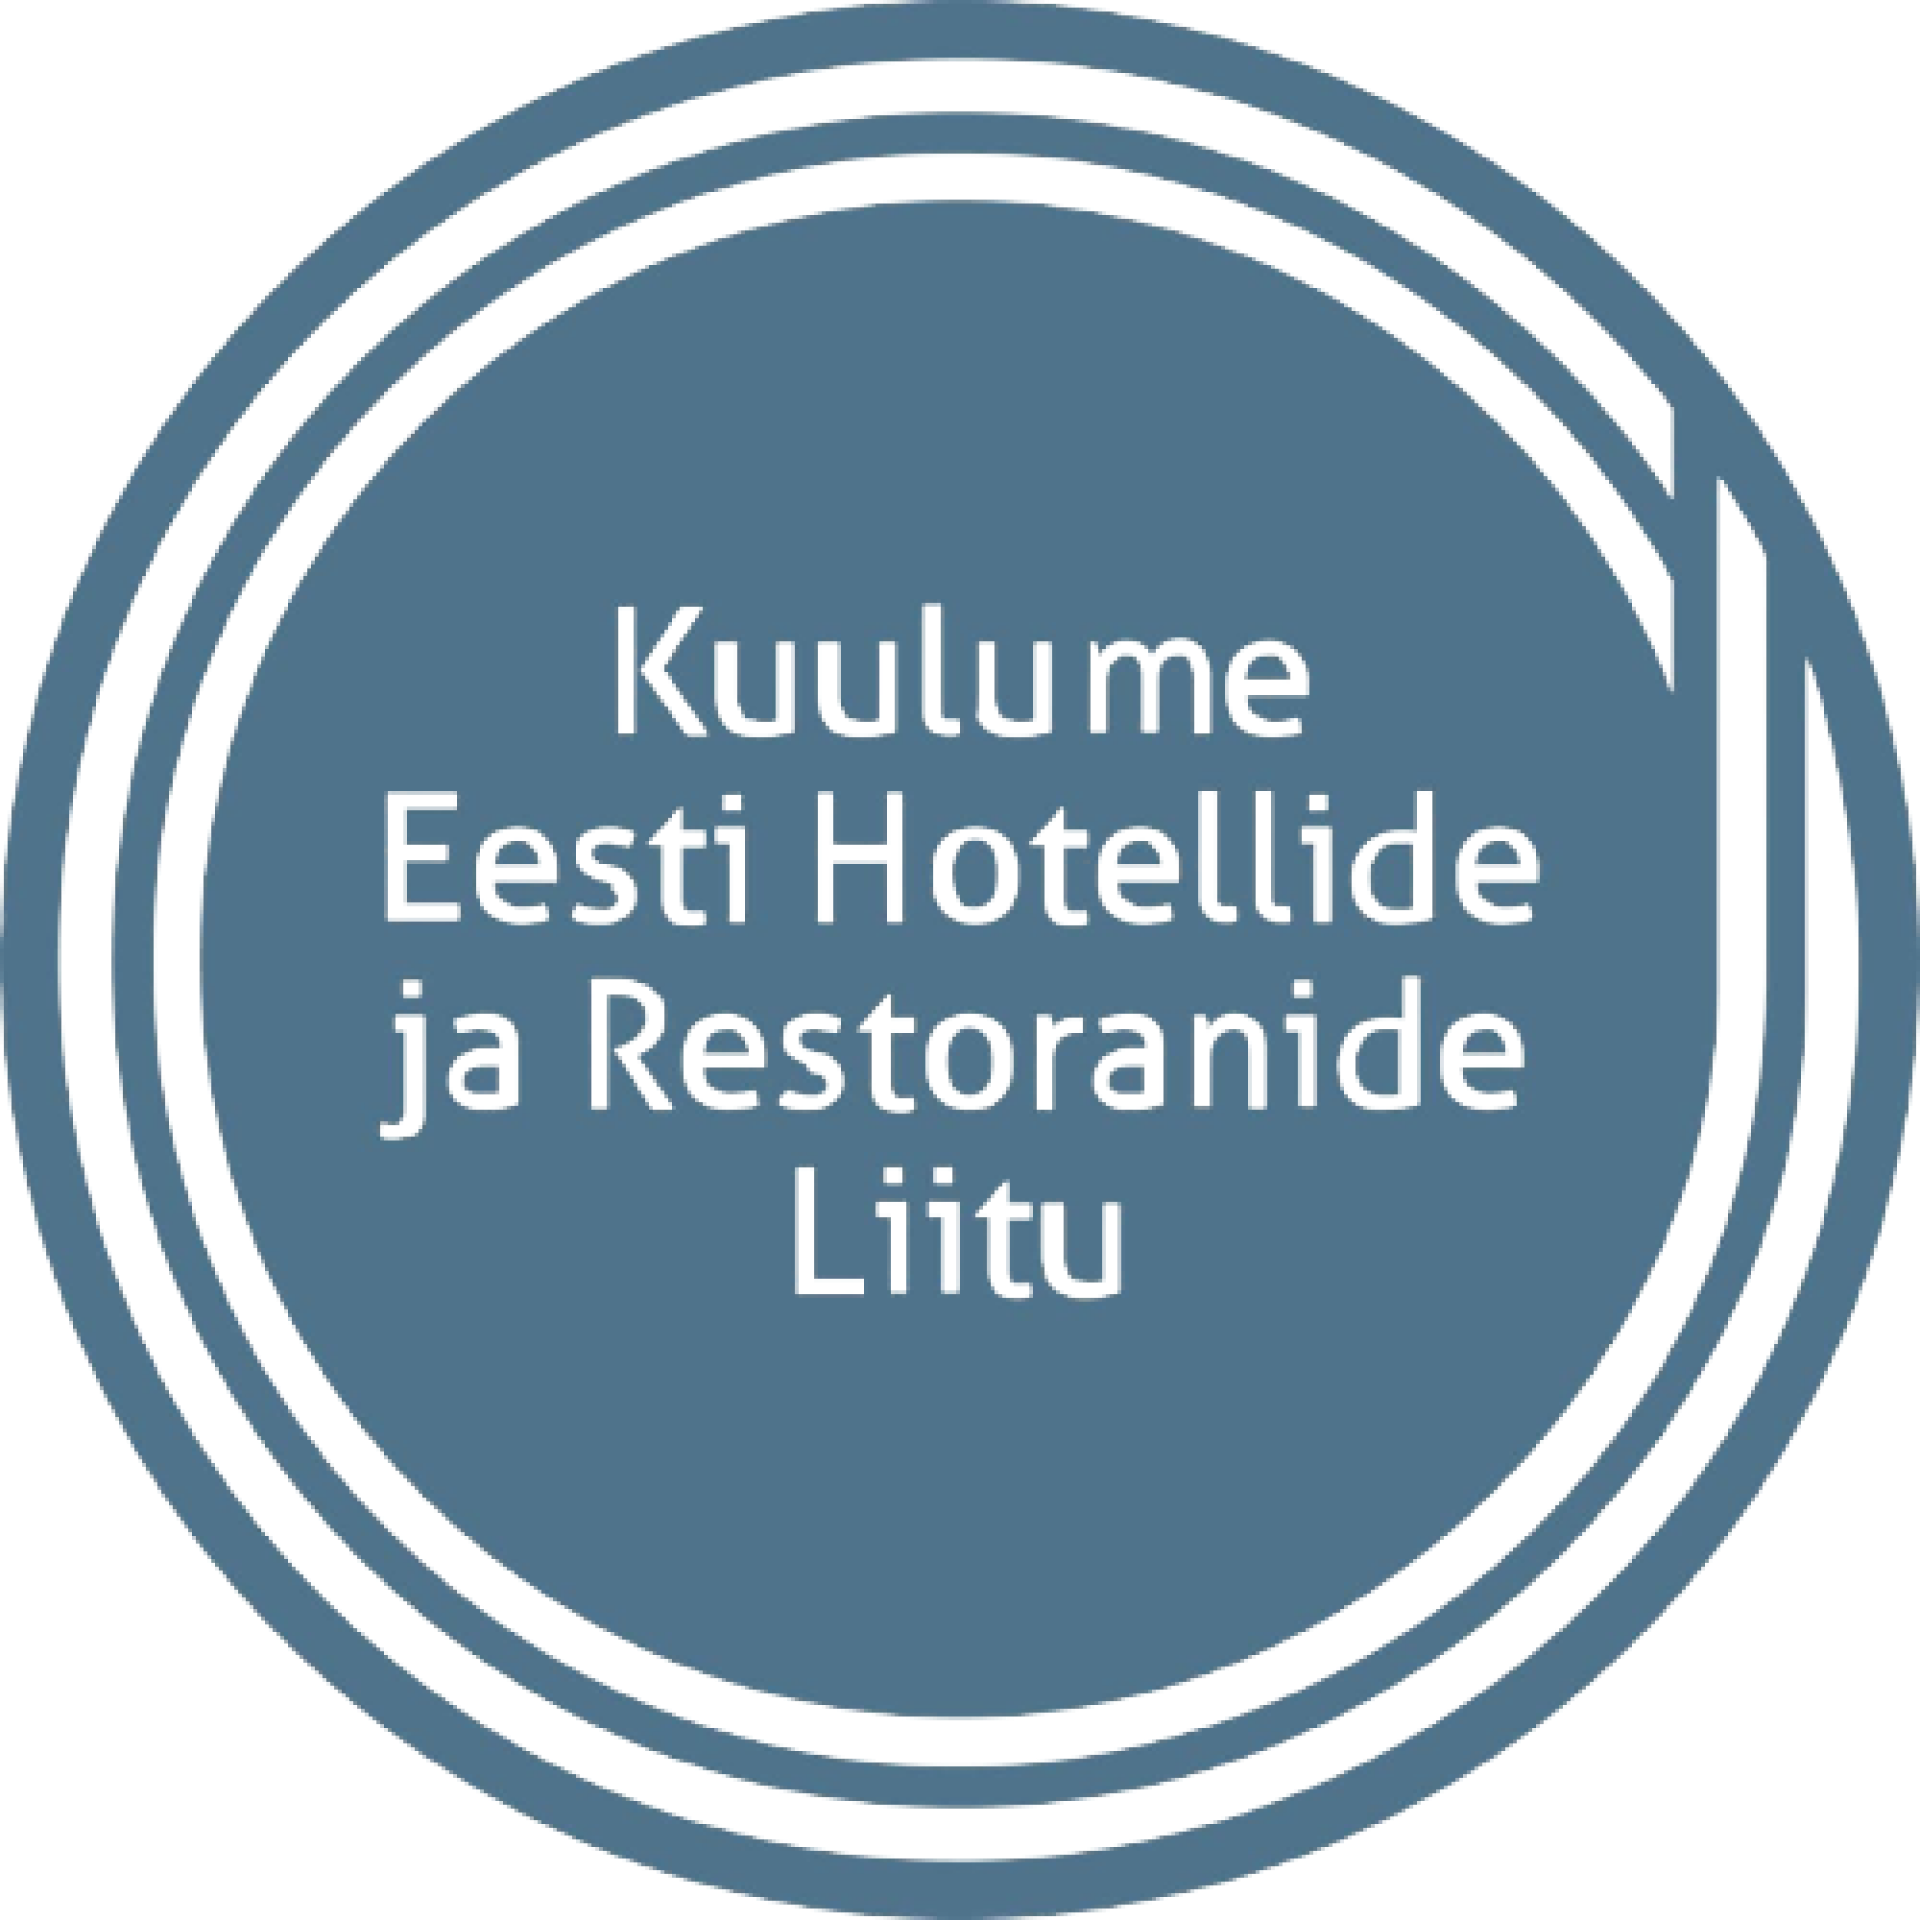 Hotel badge